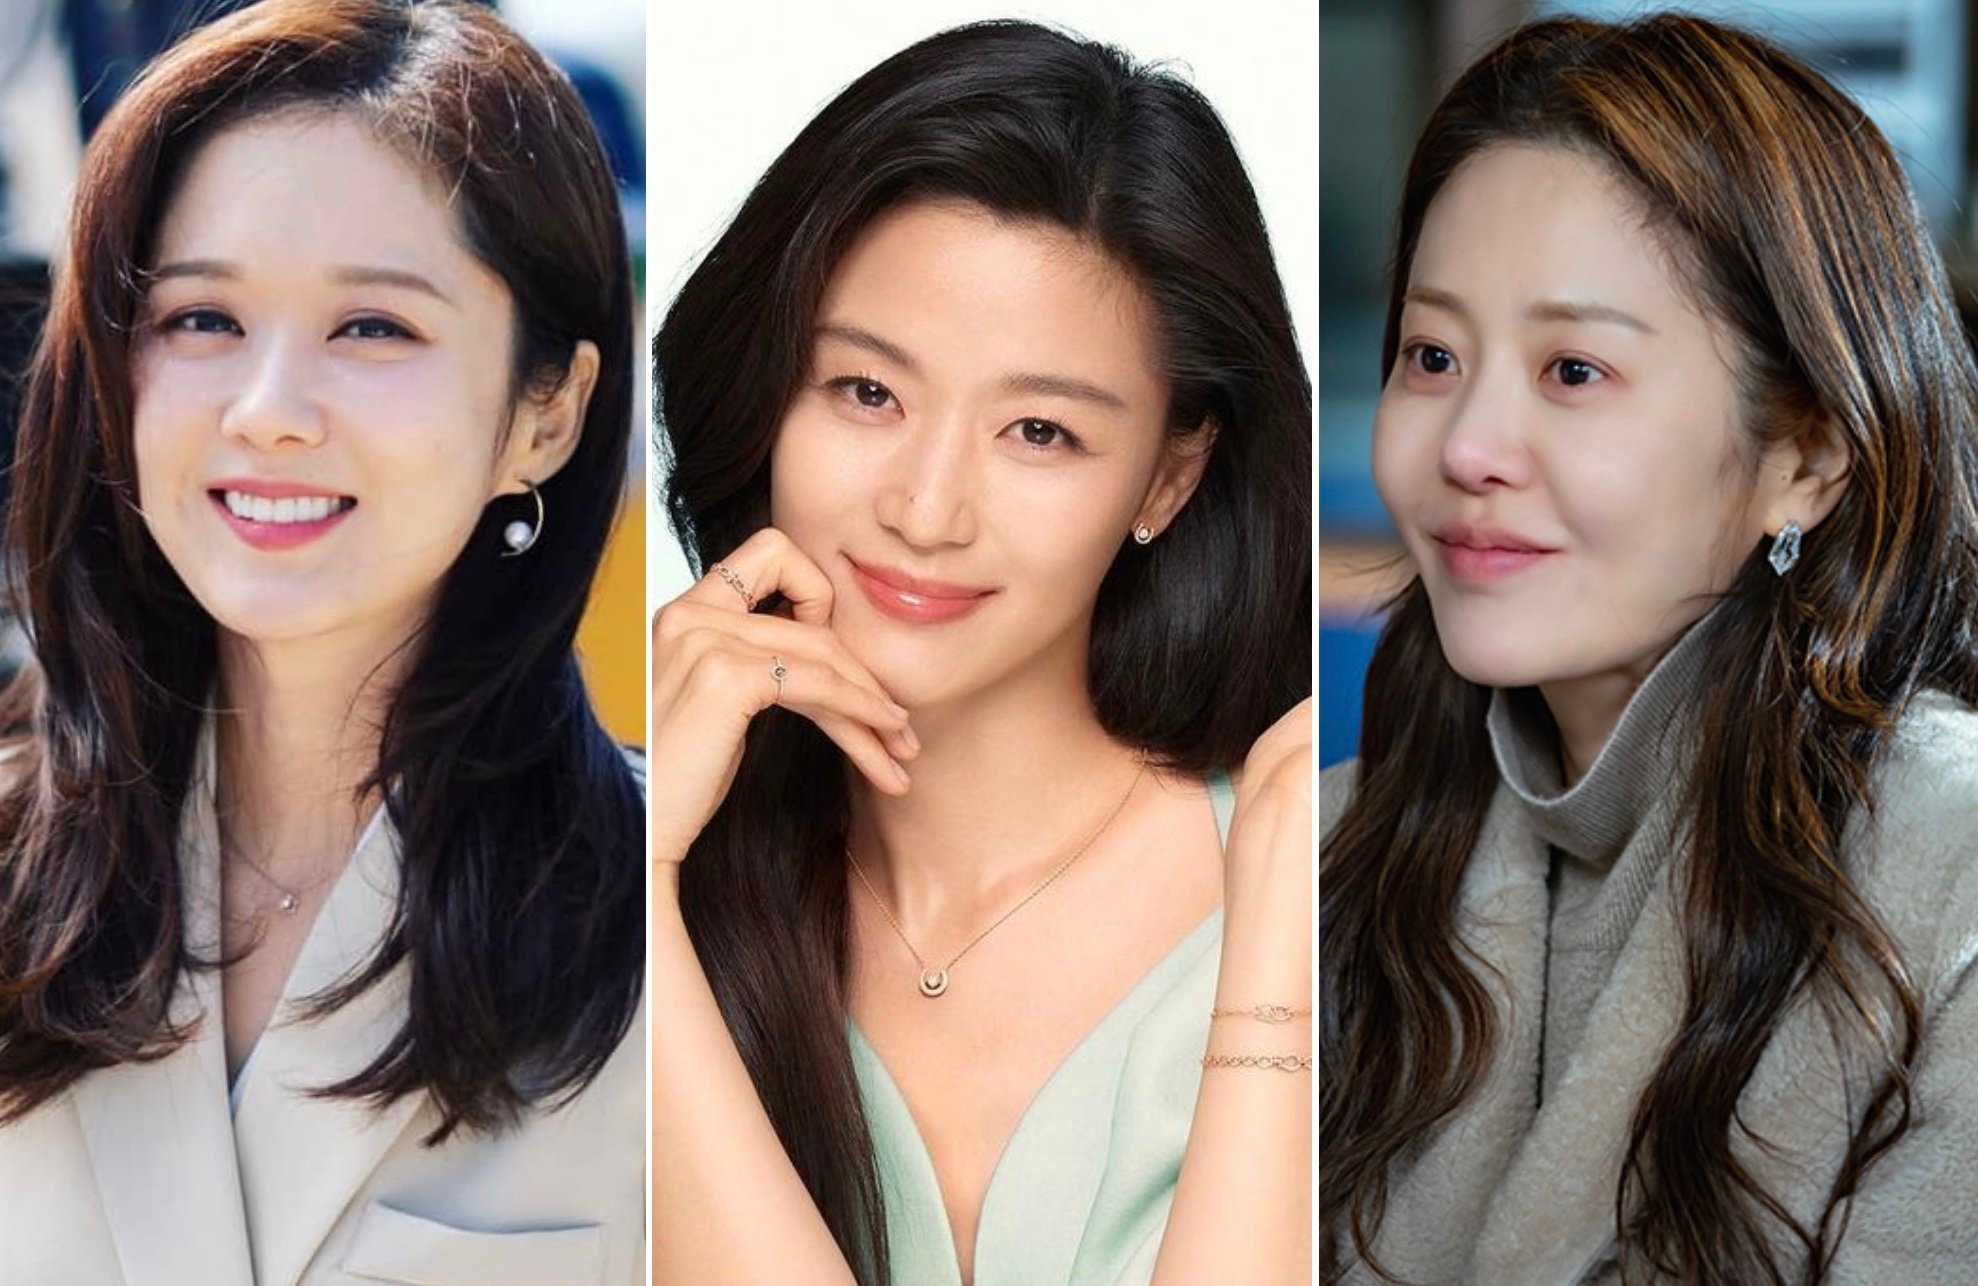 K-drama stars Jang Na-ra, Jun Ji-hyun and Go Hyun-jung all look gorgeous ... so what beauty tips do they have for us? Photos: @nara0318, @stonehenge_official/Instagram; JTBC